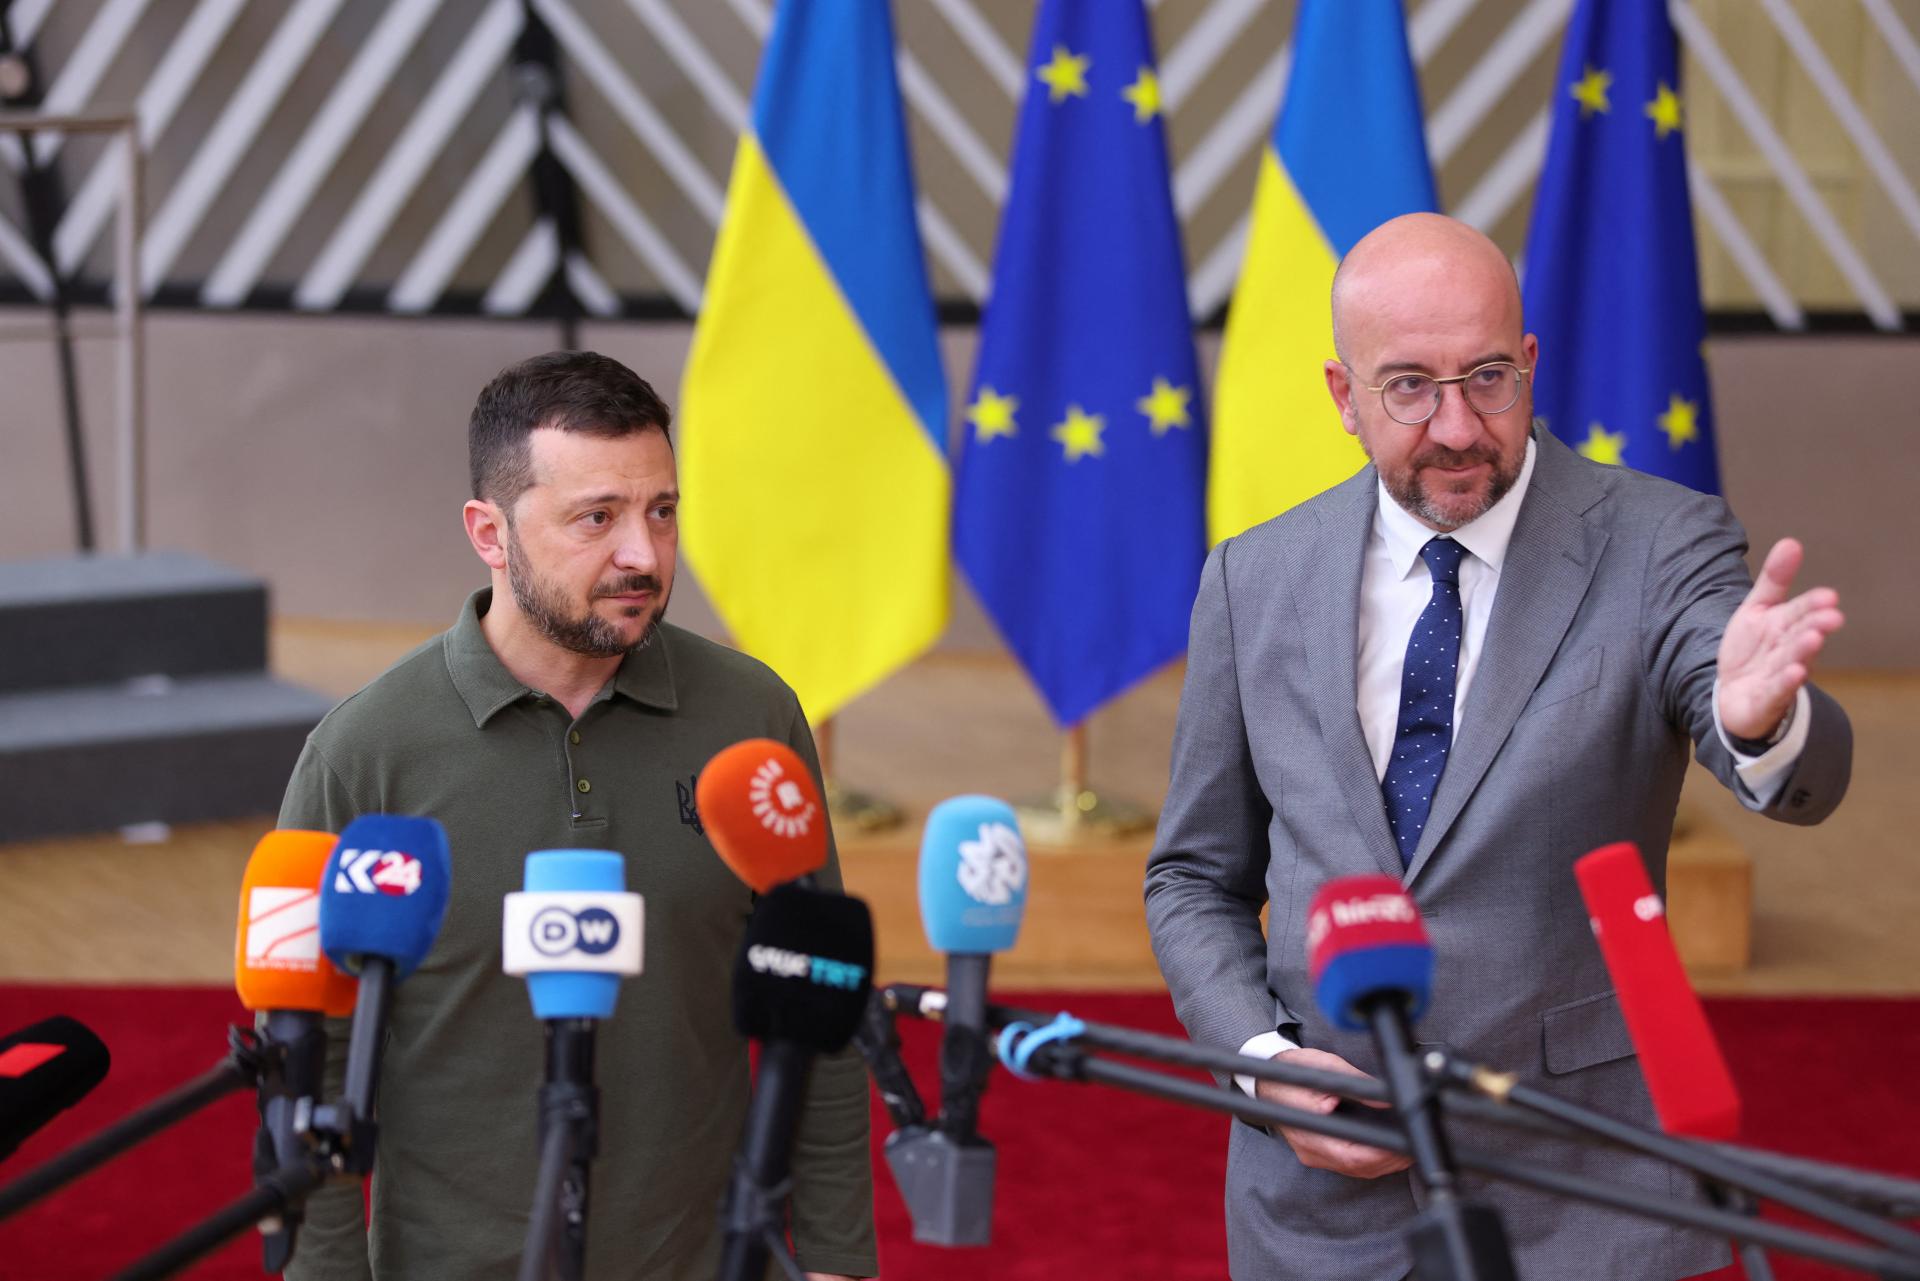 Ukrajinský prezident prišiel do Bruselu, podpíše bezpečnostné dohody